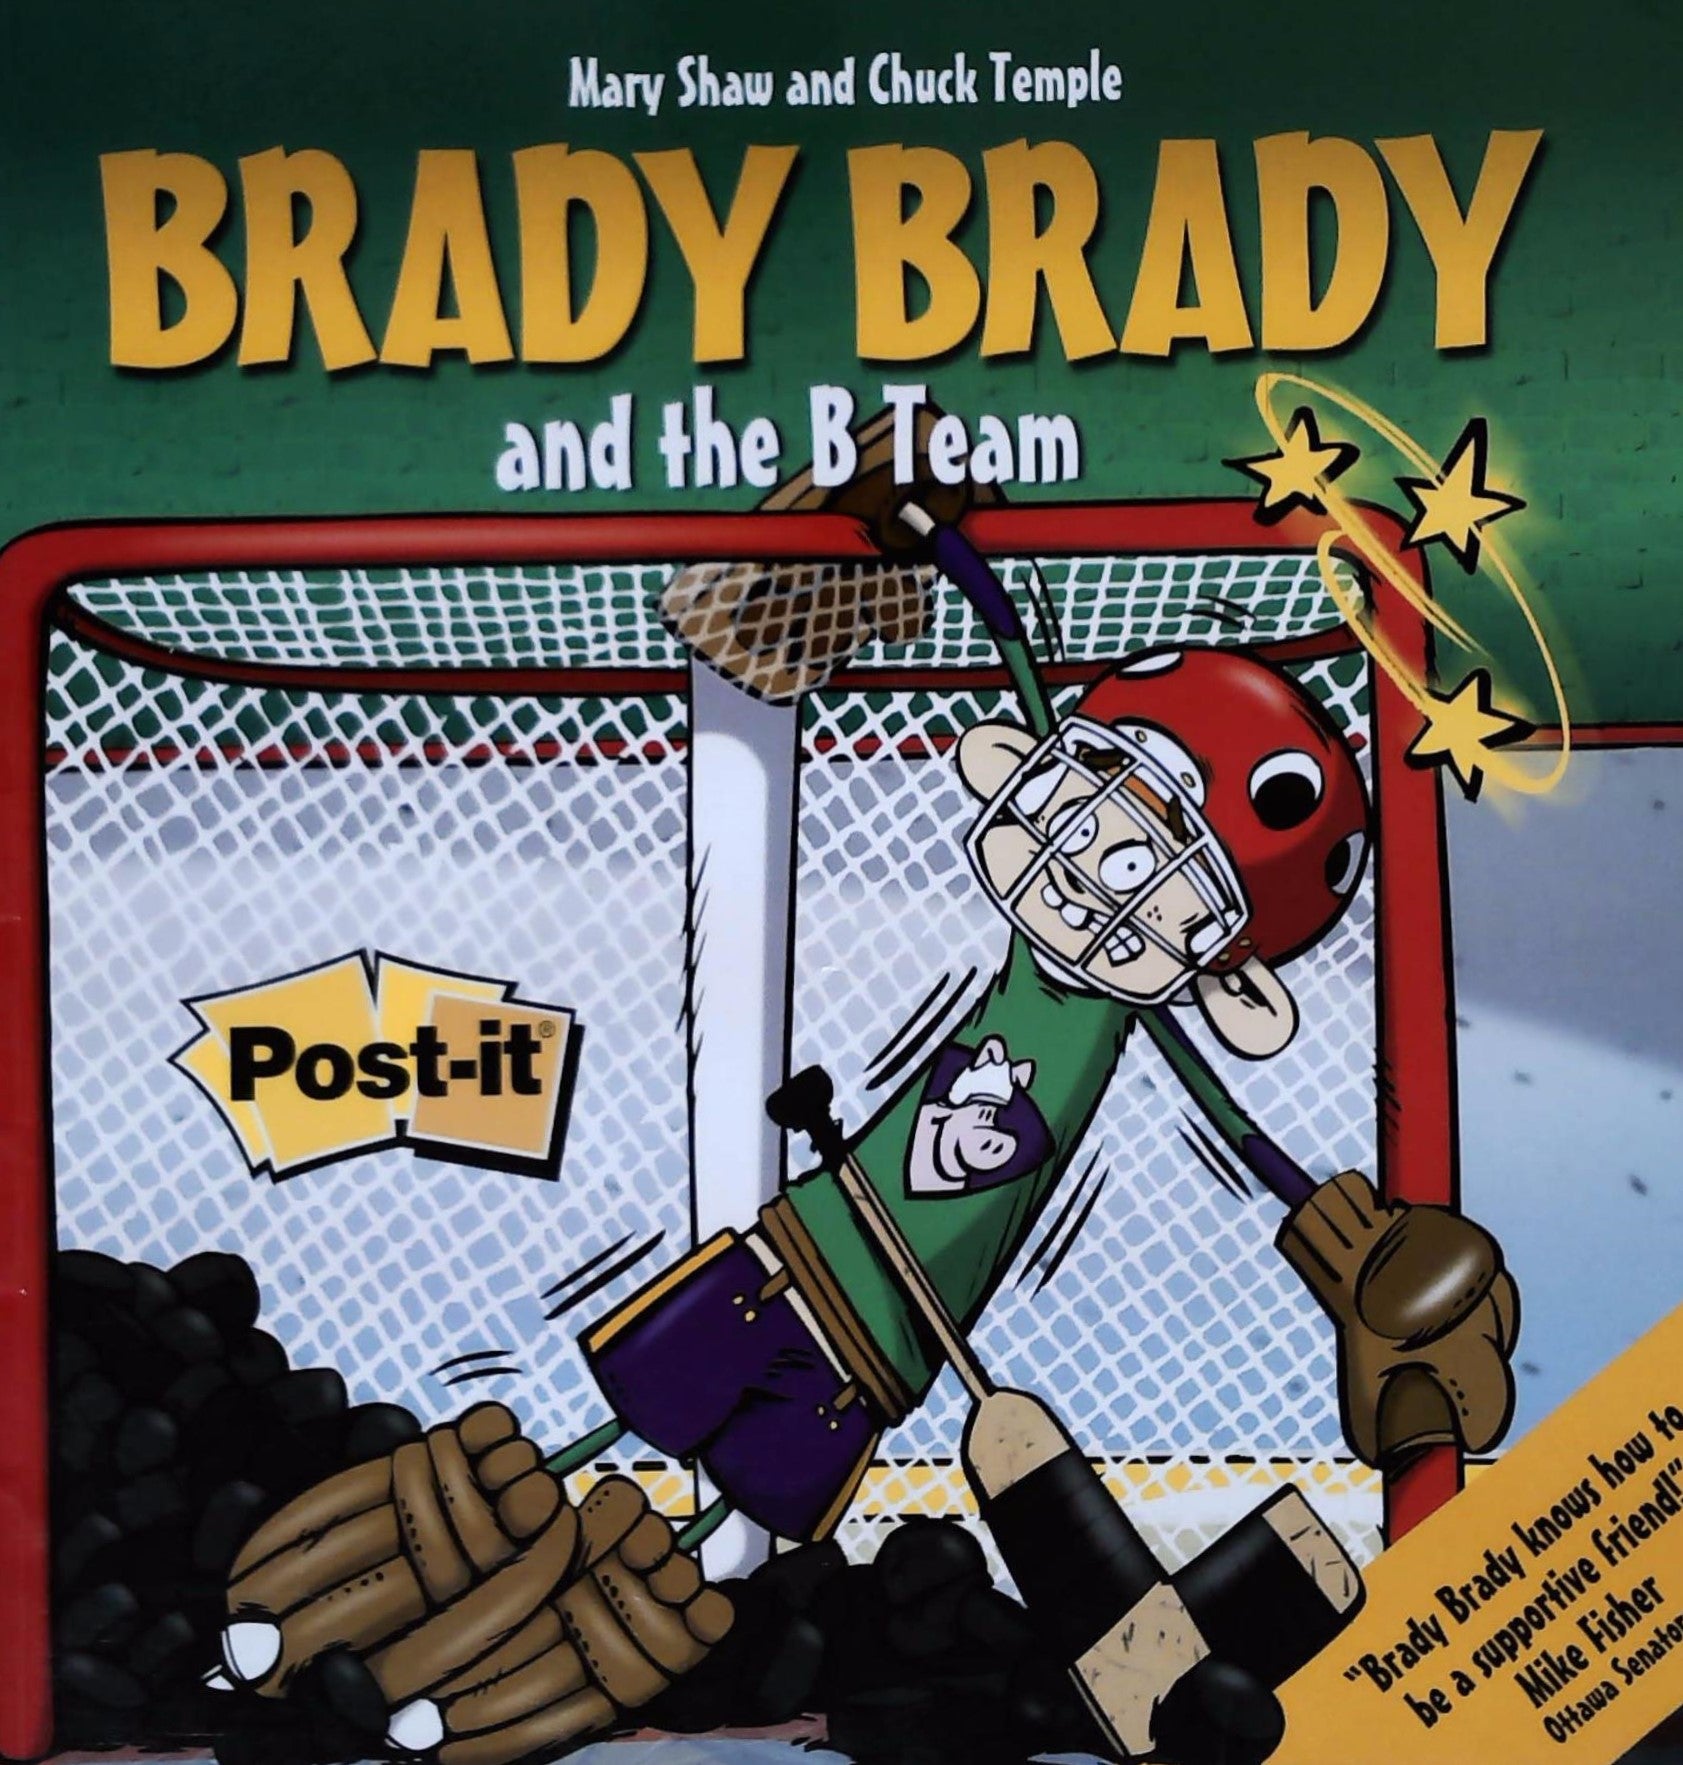 Livre ISBN 1897169094 Brady Brady and the B Team (Mary Shaw)